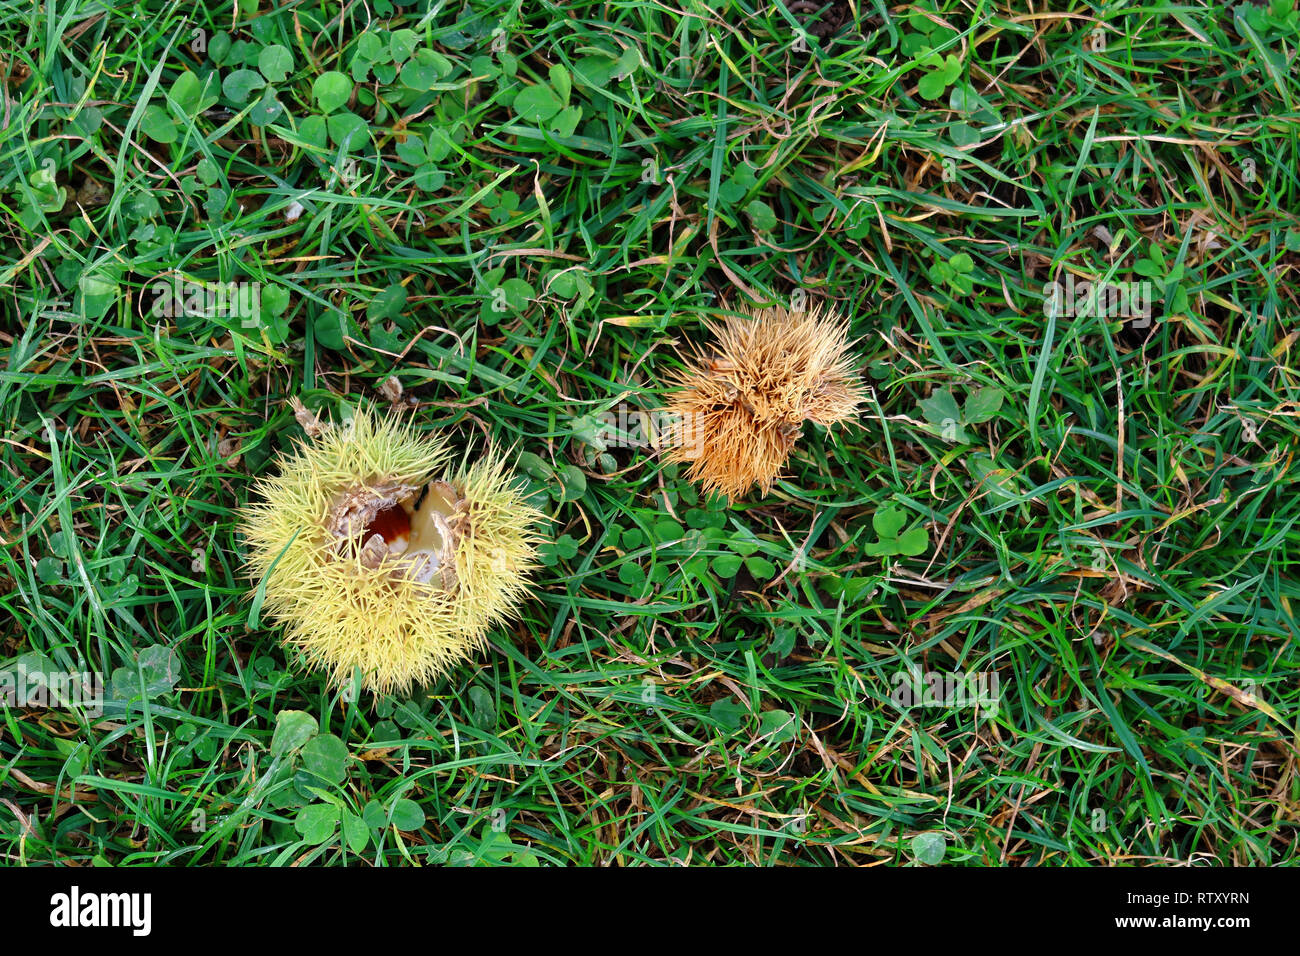 Sweet chestnut husk in the green grass Stock Photo